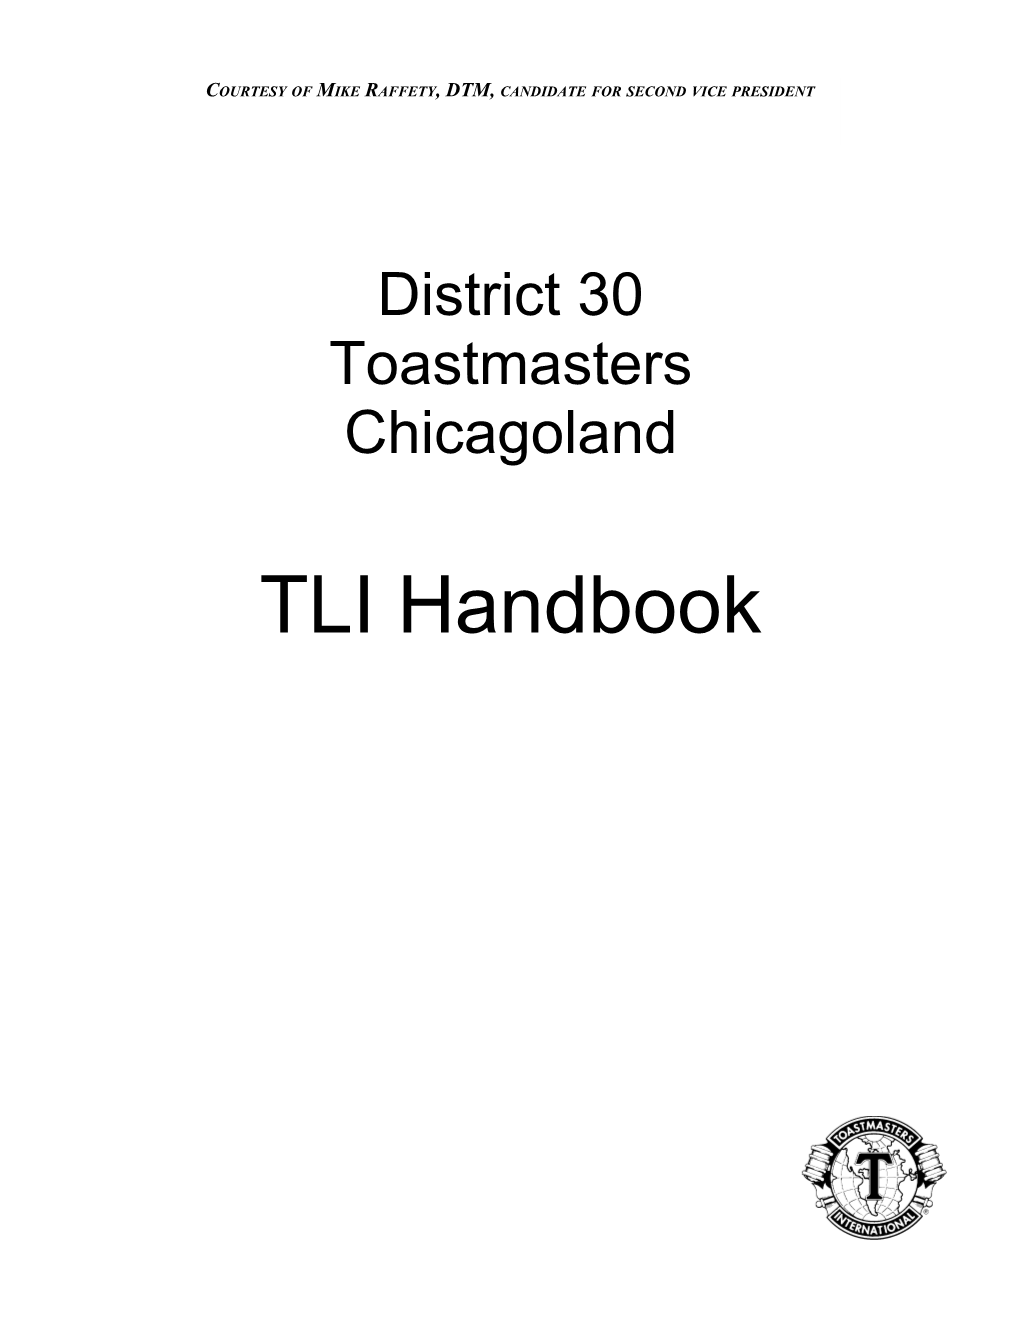 TLI Deans, Fellow Toastmasters